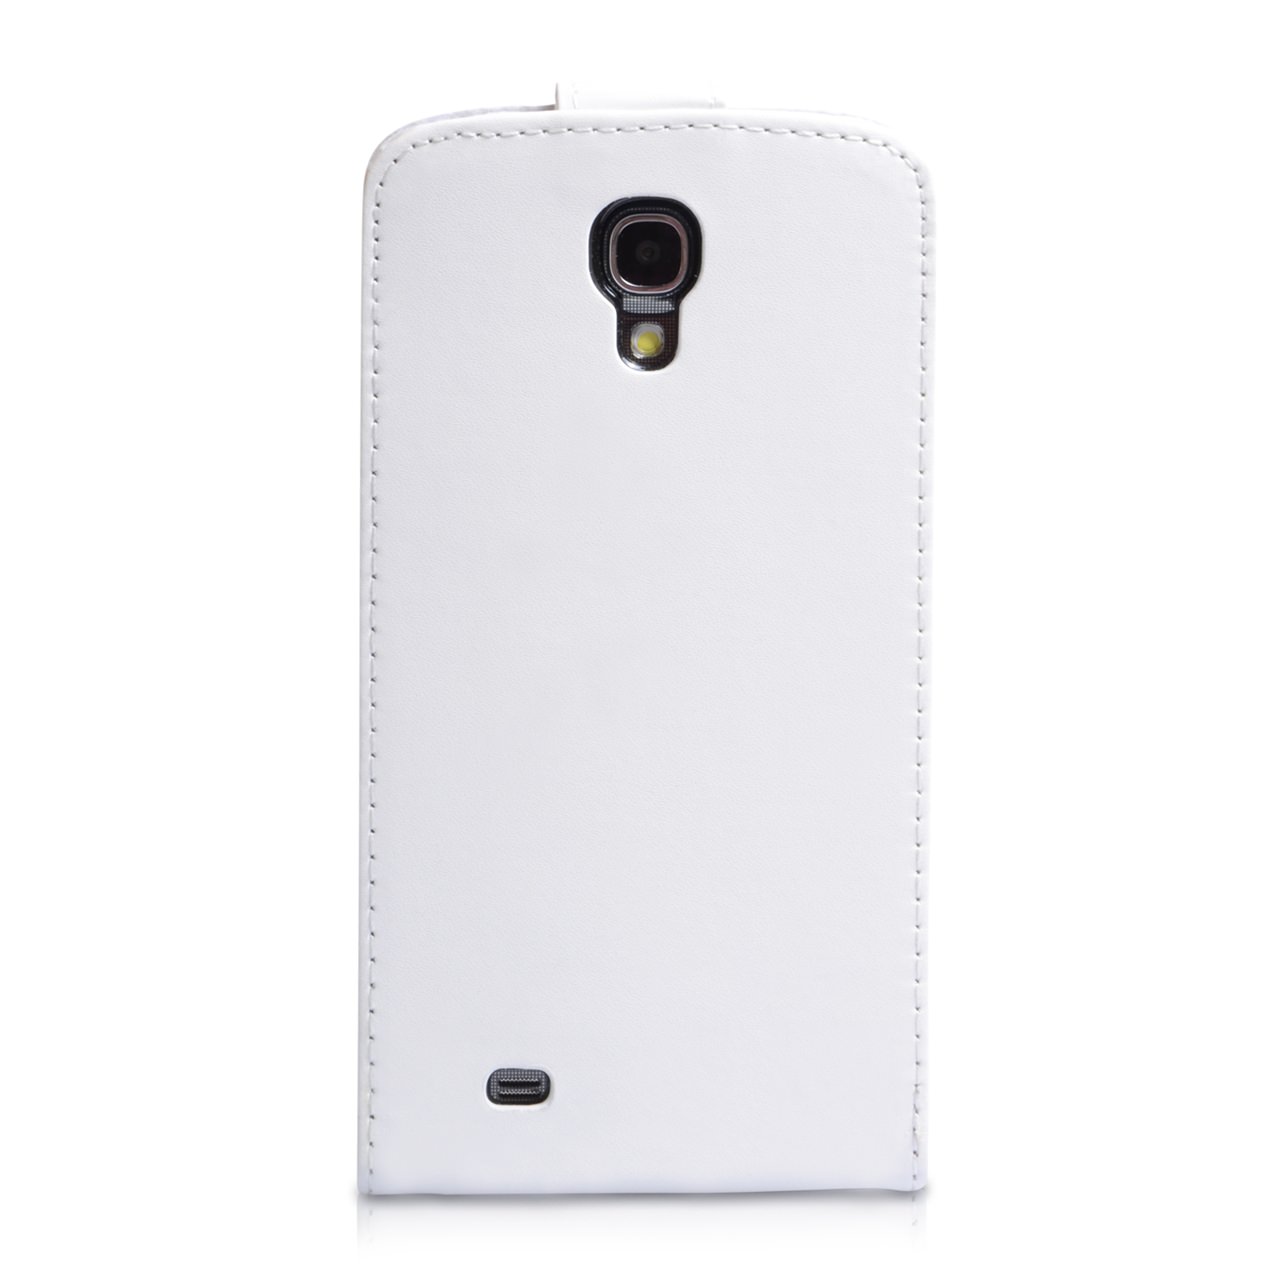 YouSave Samsung Galaxy Mega 6.3 White Leather Effect Flip Case